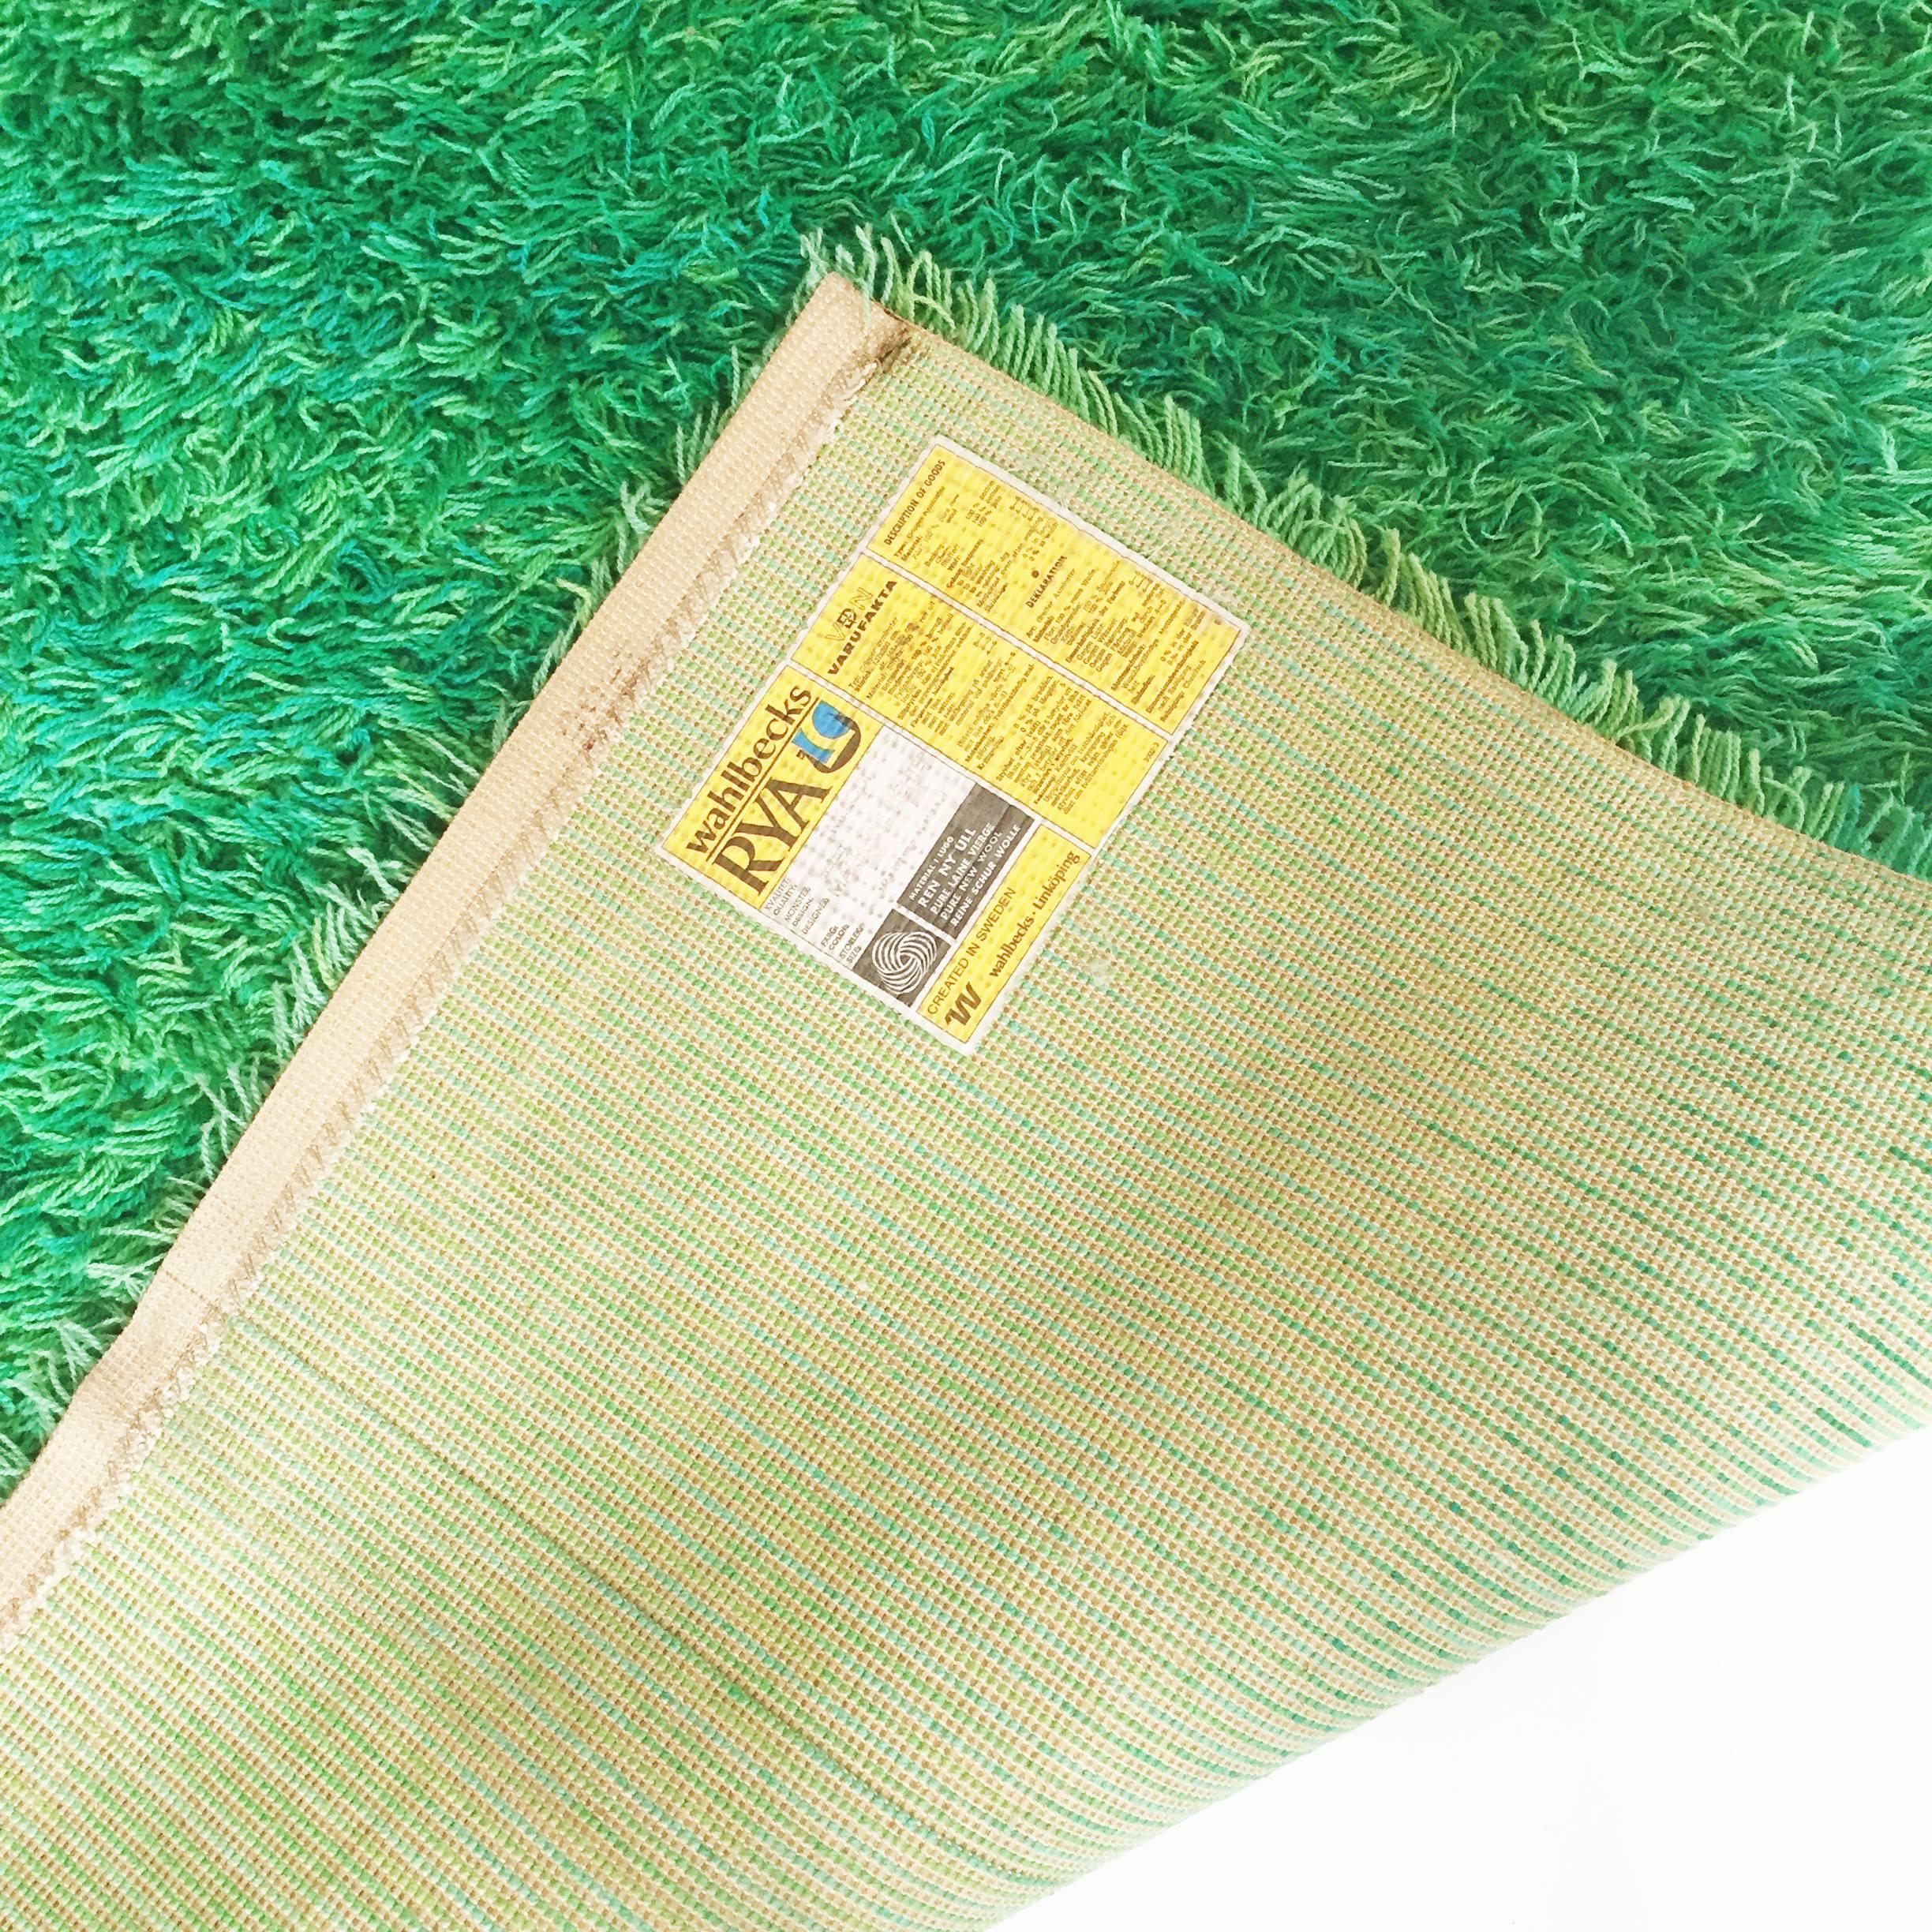 Wool Original 1960s Green Rya Rug by Marianne Richter for Wahlbecks Ab, Sweden